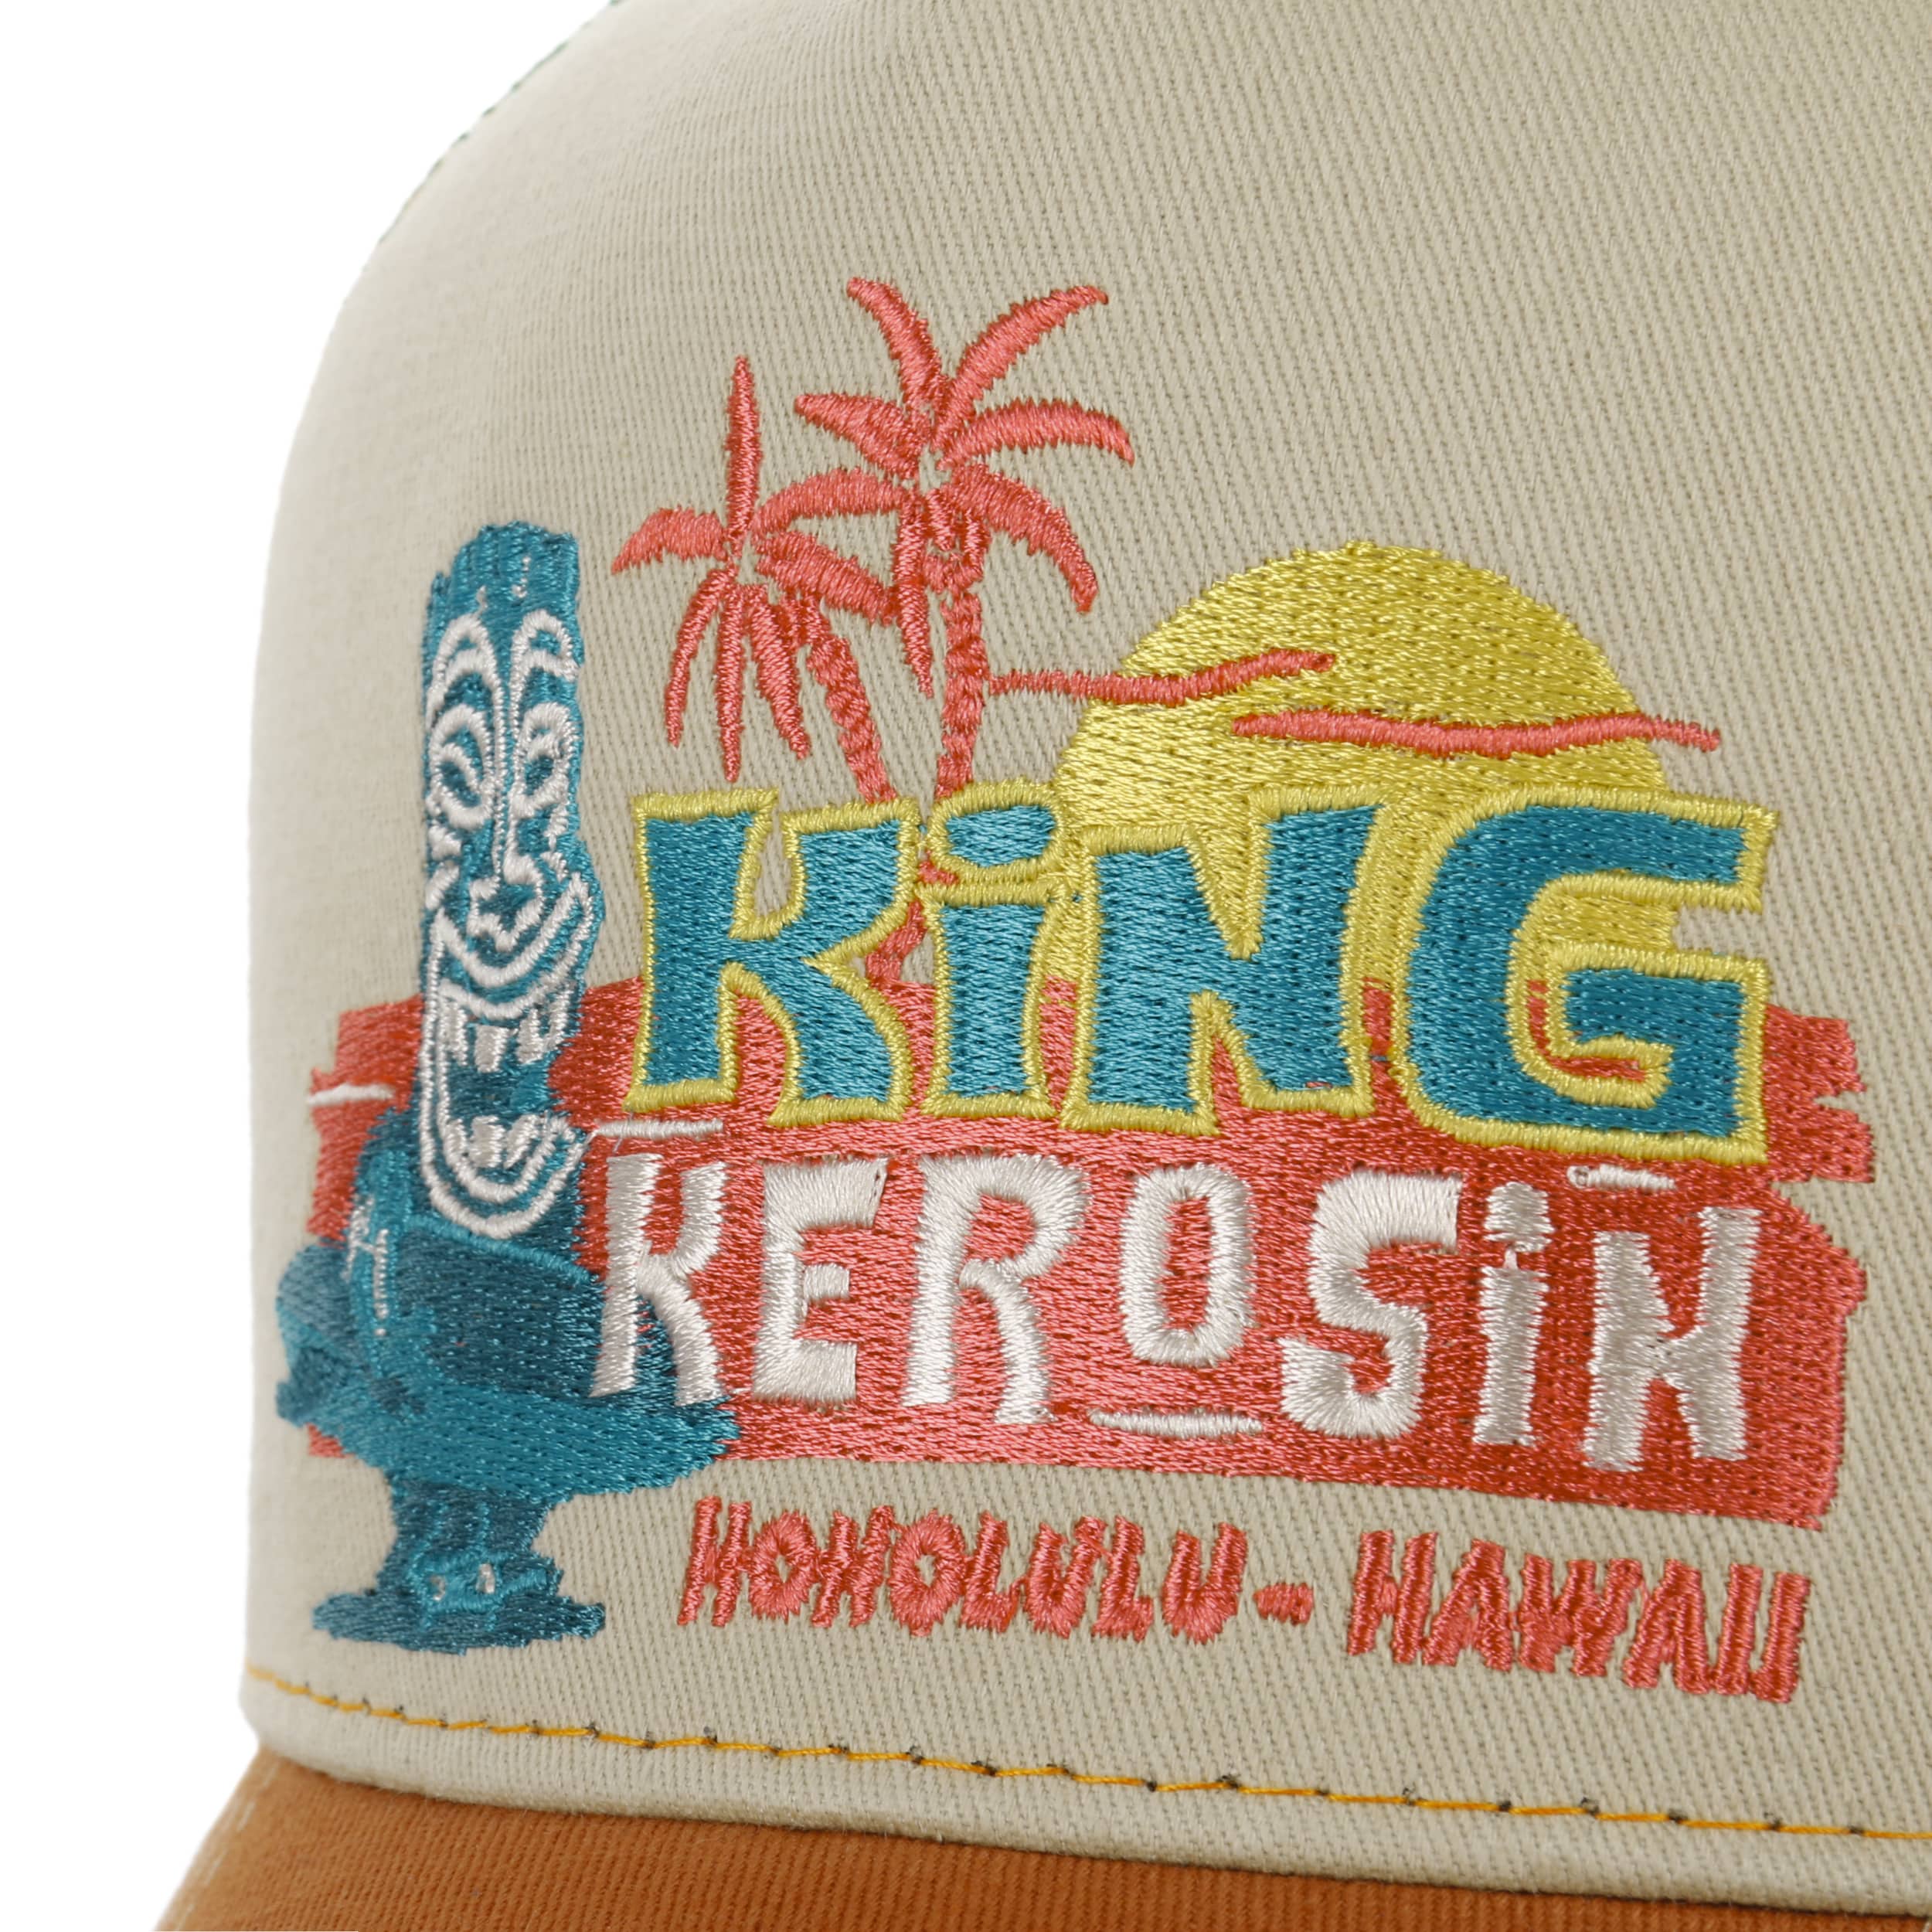 971934 - King Kerosin Tiki Surf trucker cap 